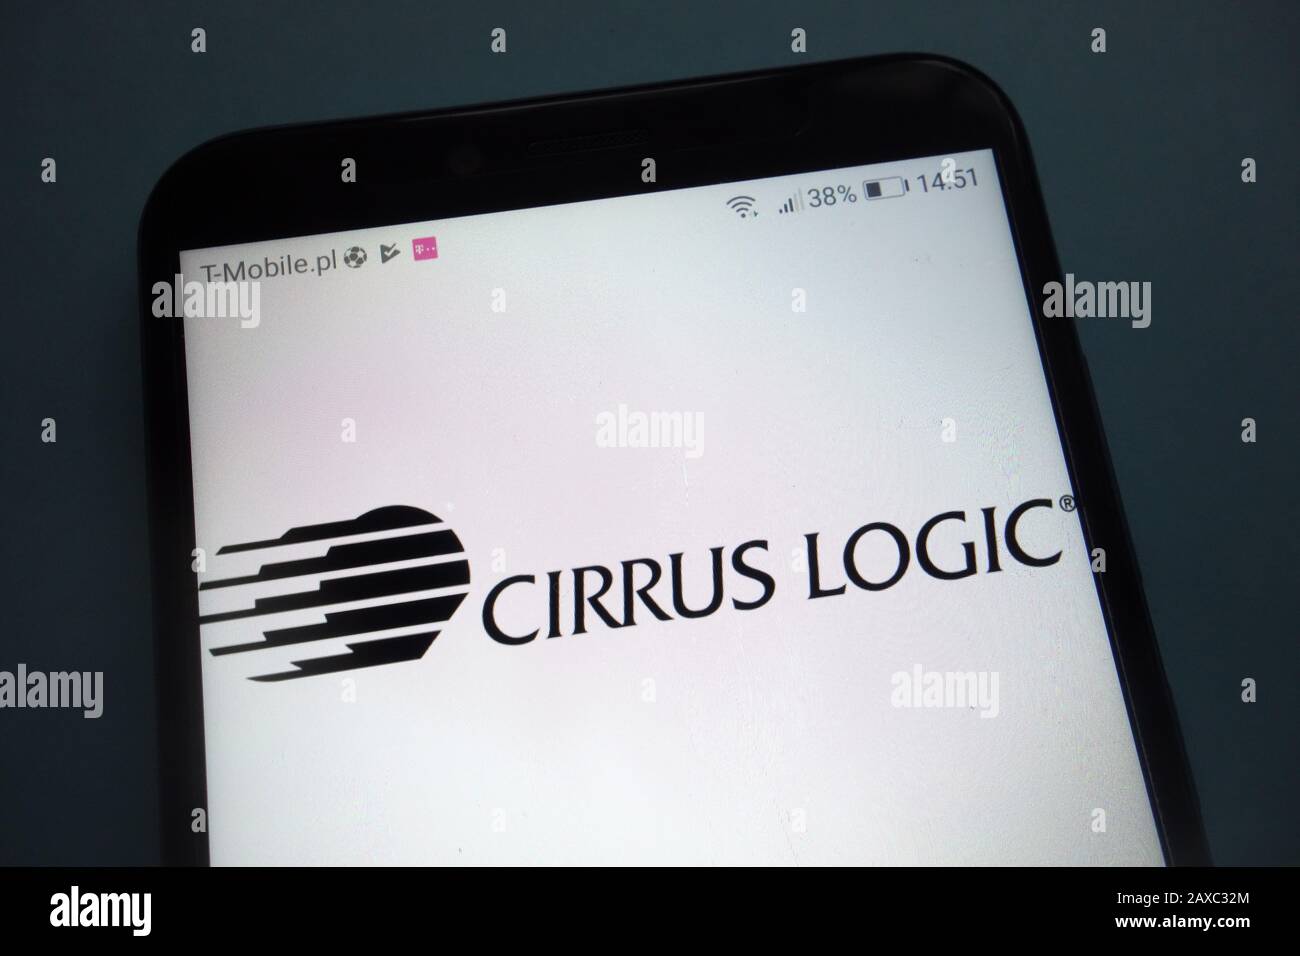 Cirrus Logic logo on smartphone Stock Photo